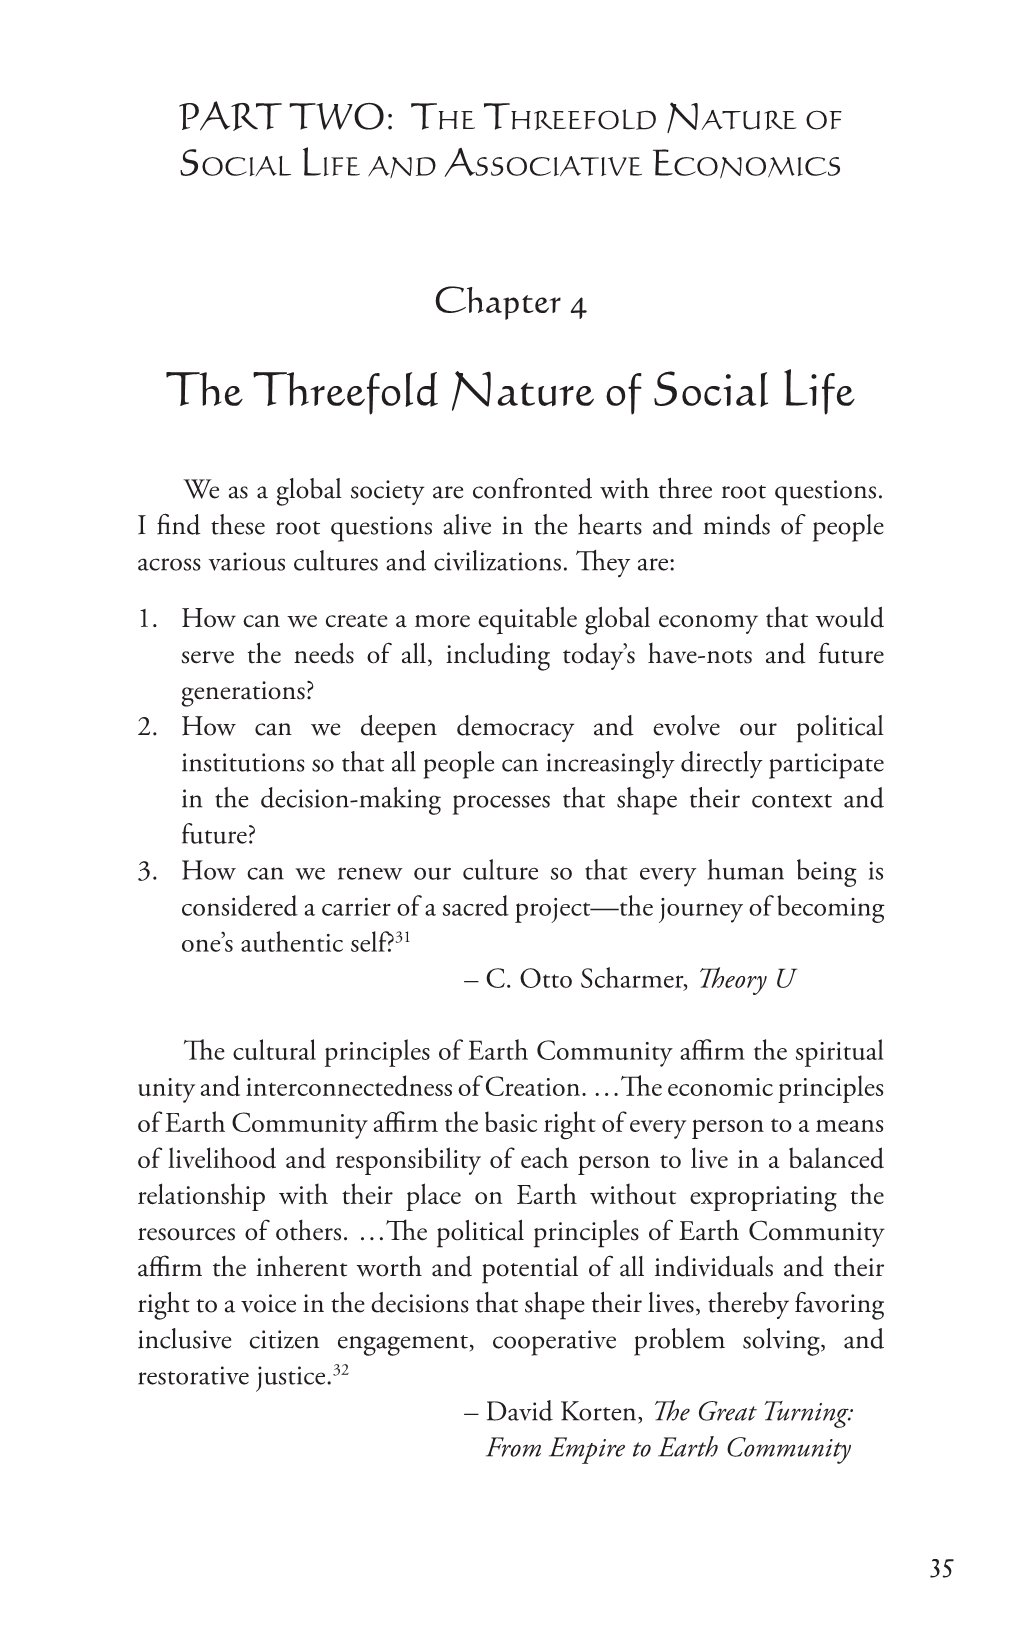 The Threefold Nature of Social Life and Associative Economics